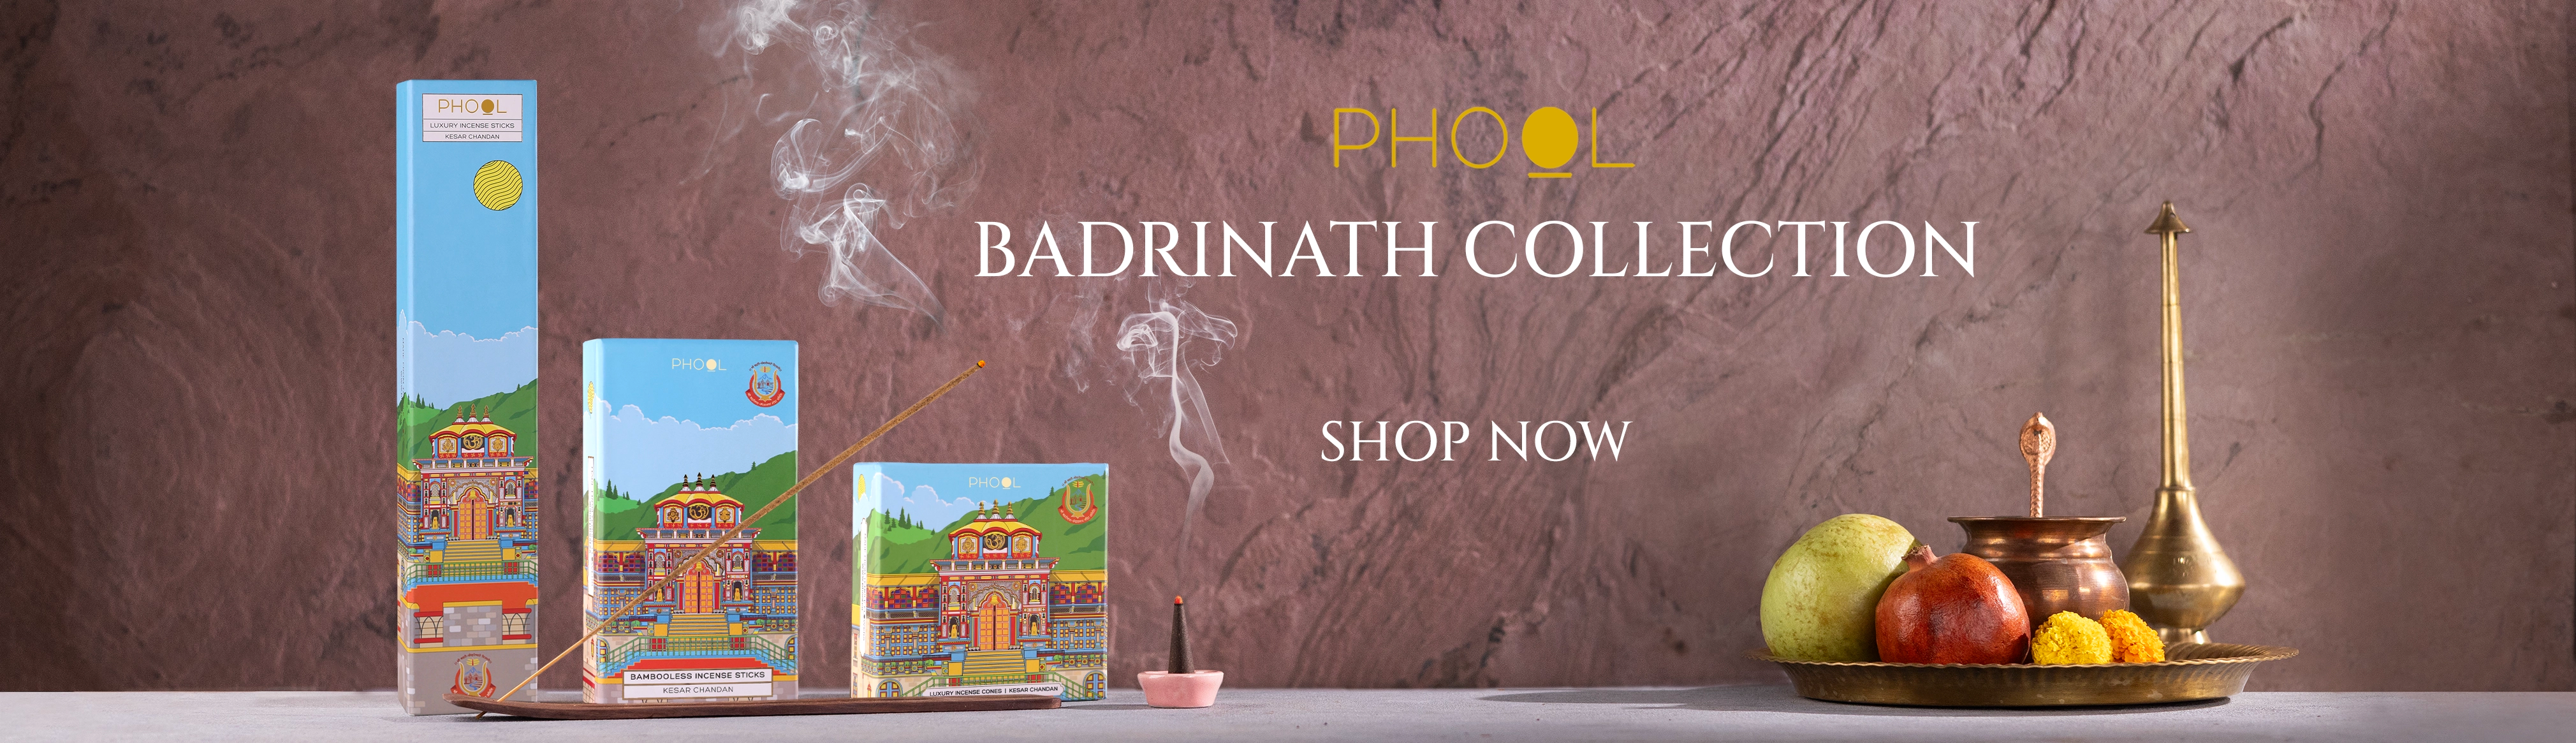 Badrinath Collection